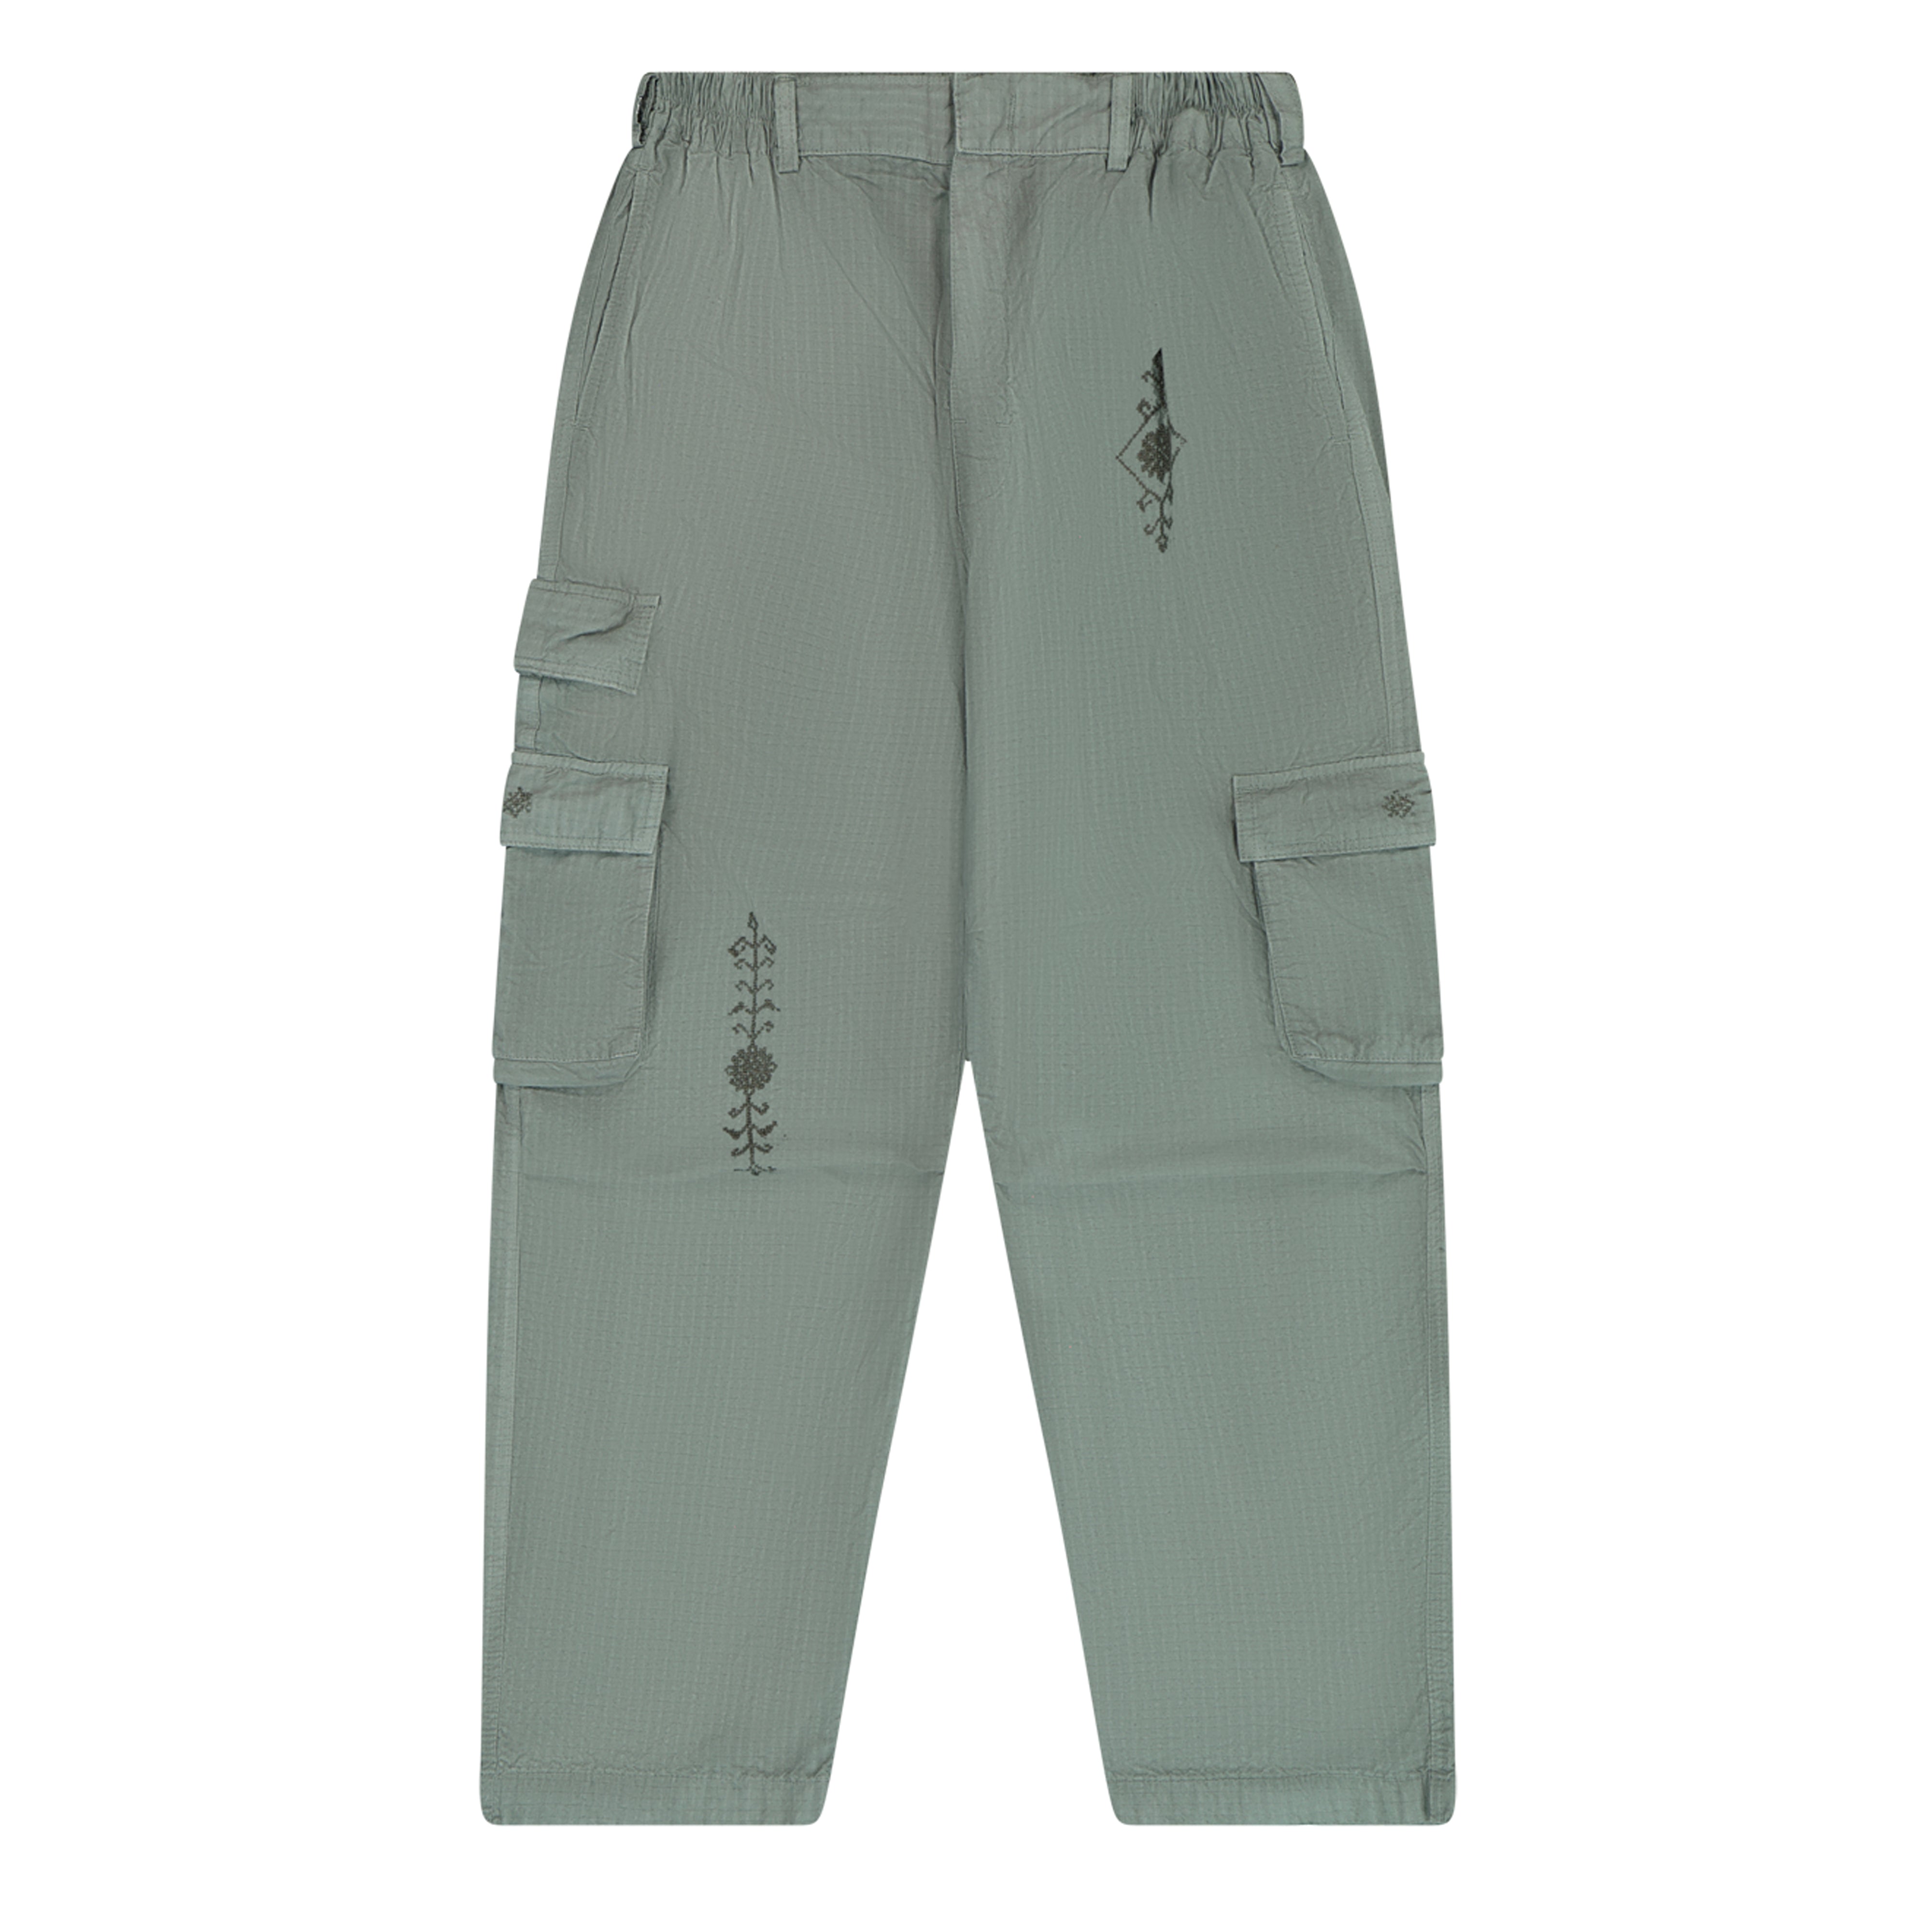 SABALI AW21 Pastel Green Short Pants - DOT Made